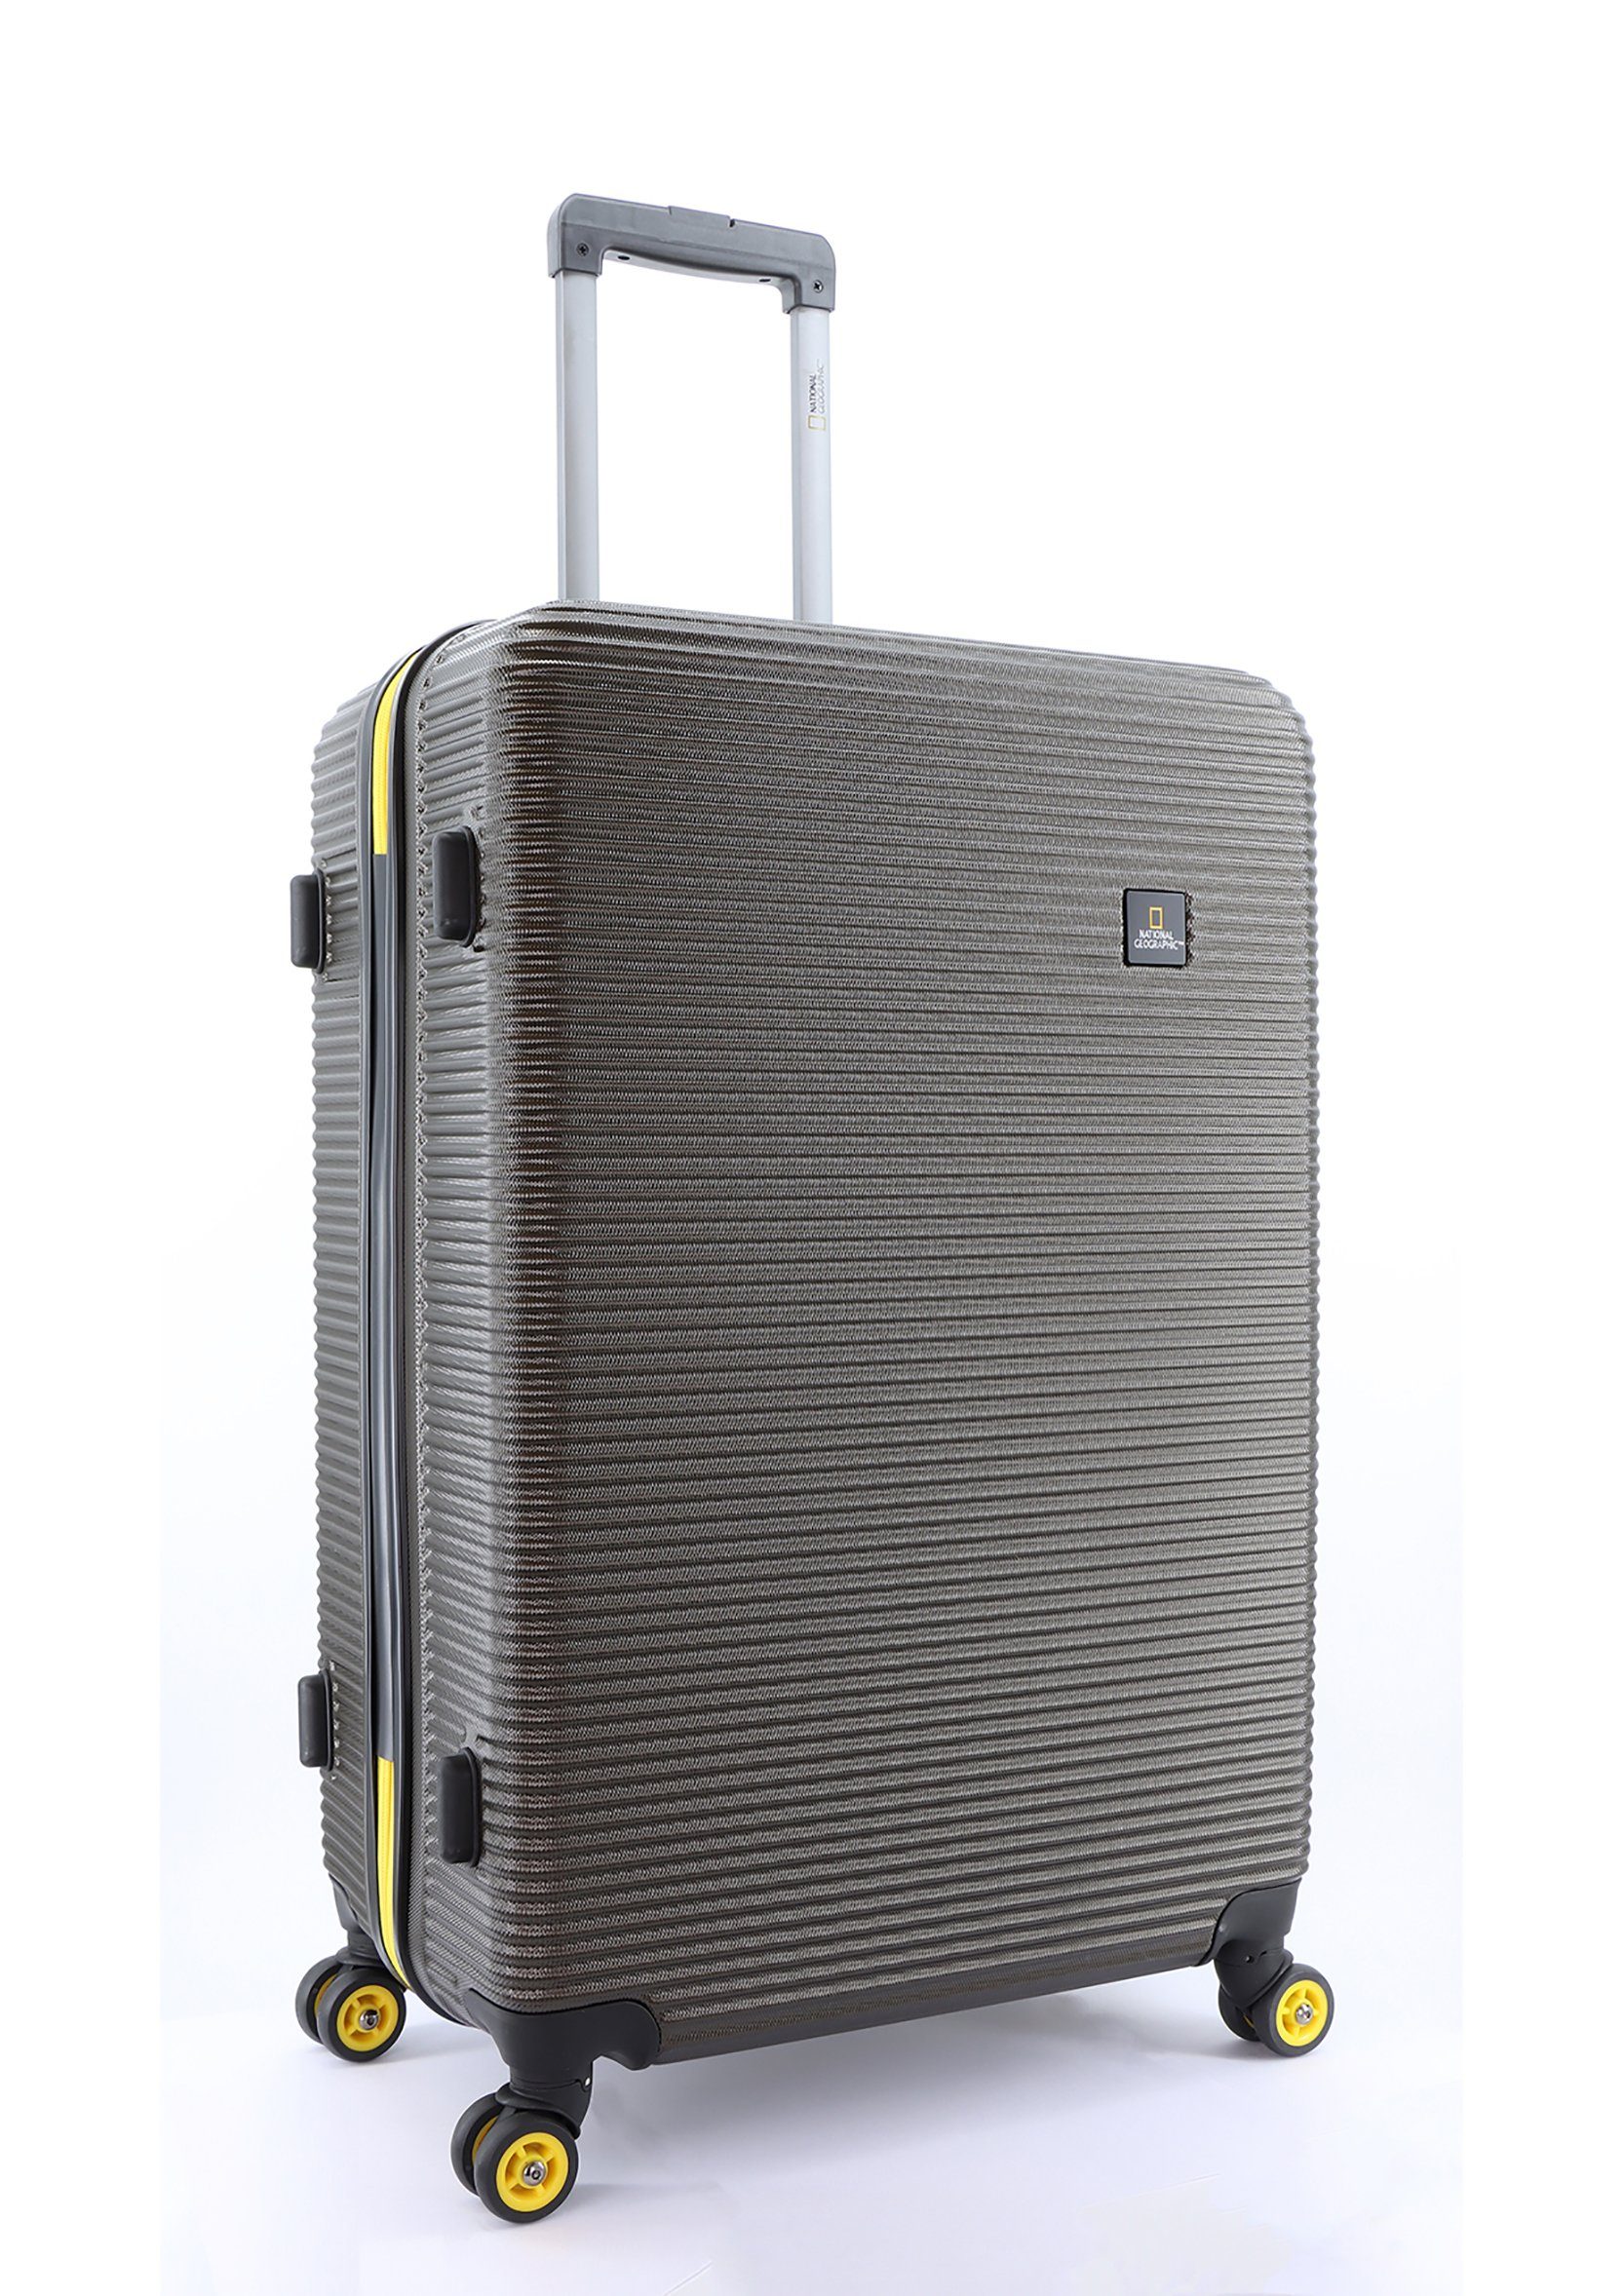 TSA-Zahlenschloss Koffer Abroad, GEOGRAPHIC khaki integriertem mit NATIONAL 11